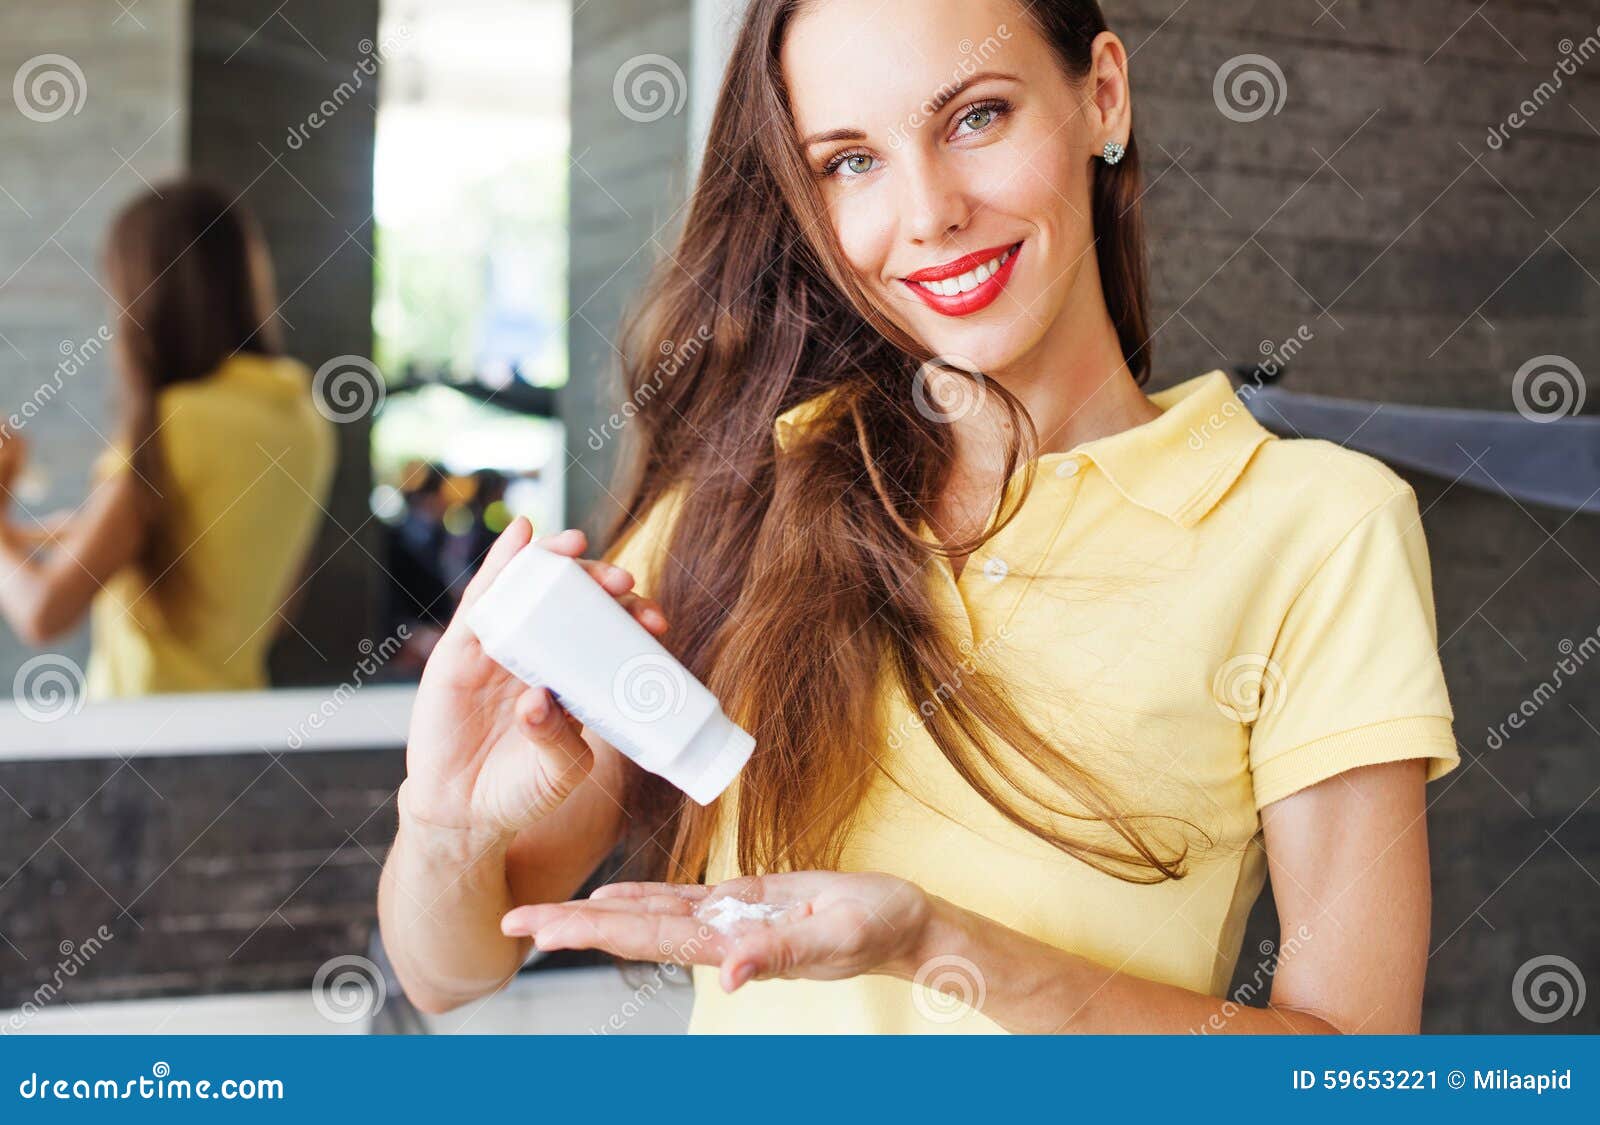 woman applying dry shampoo on her hair